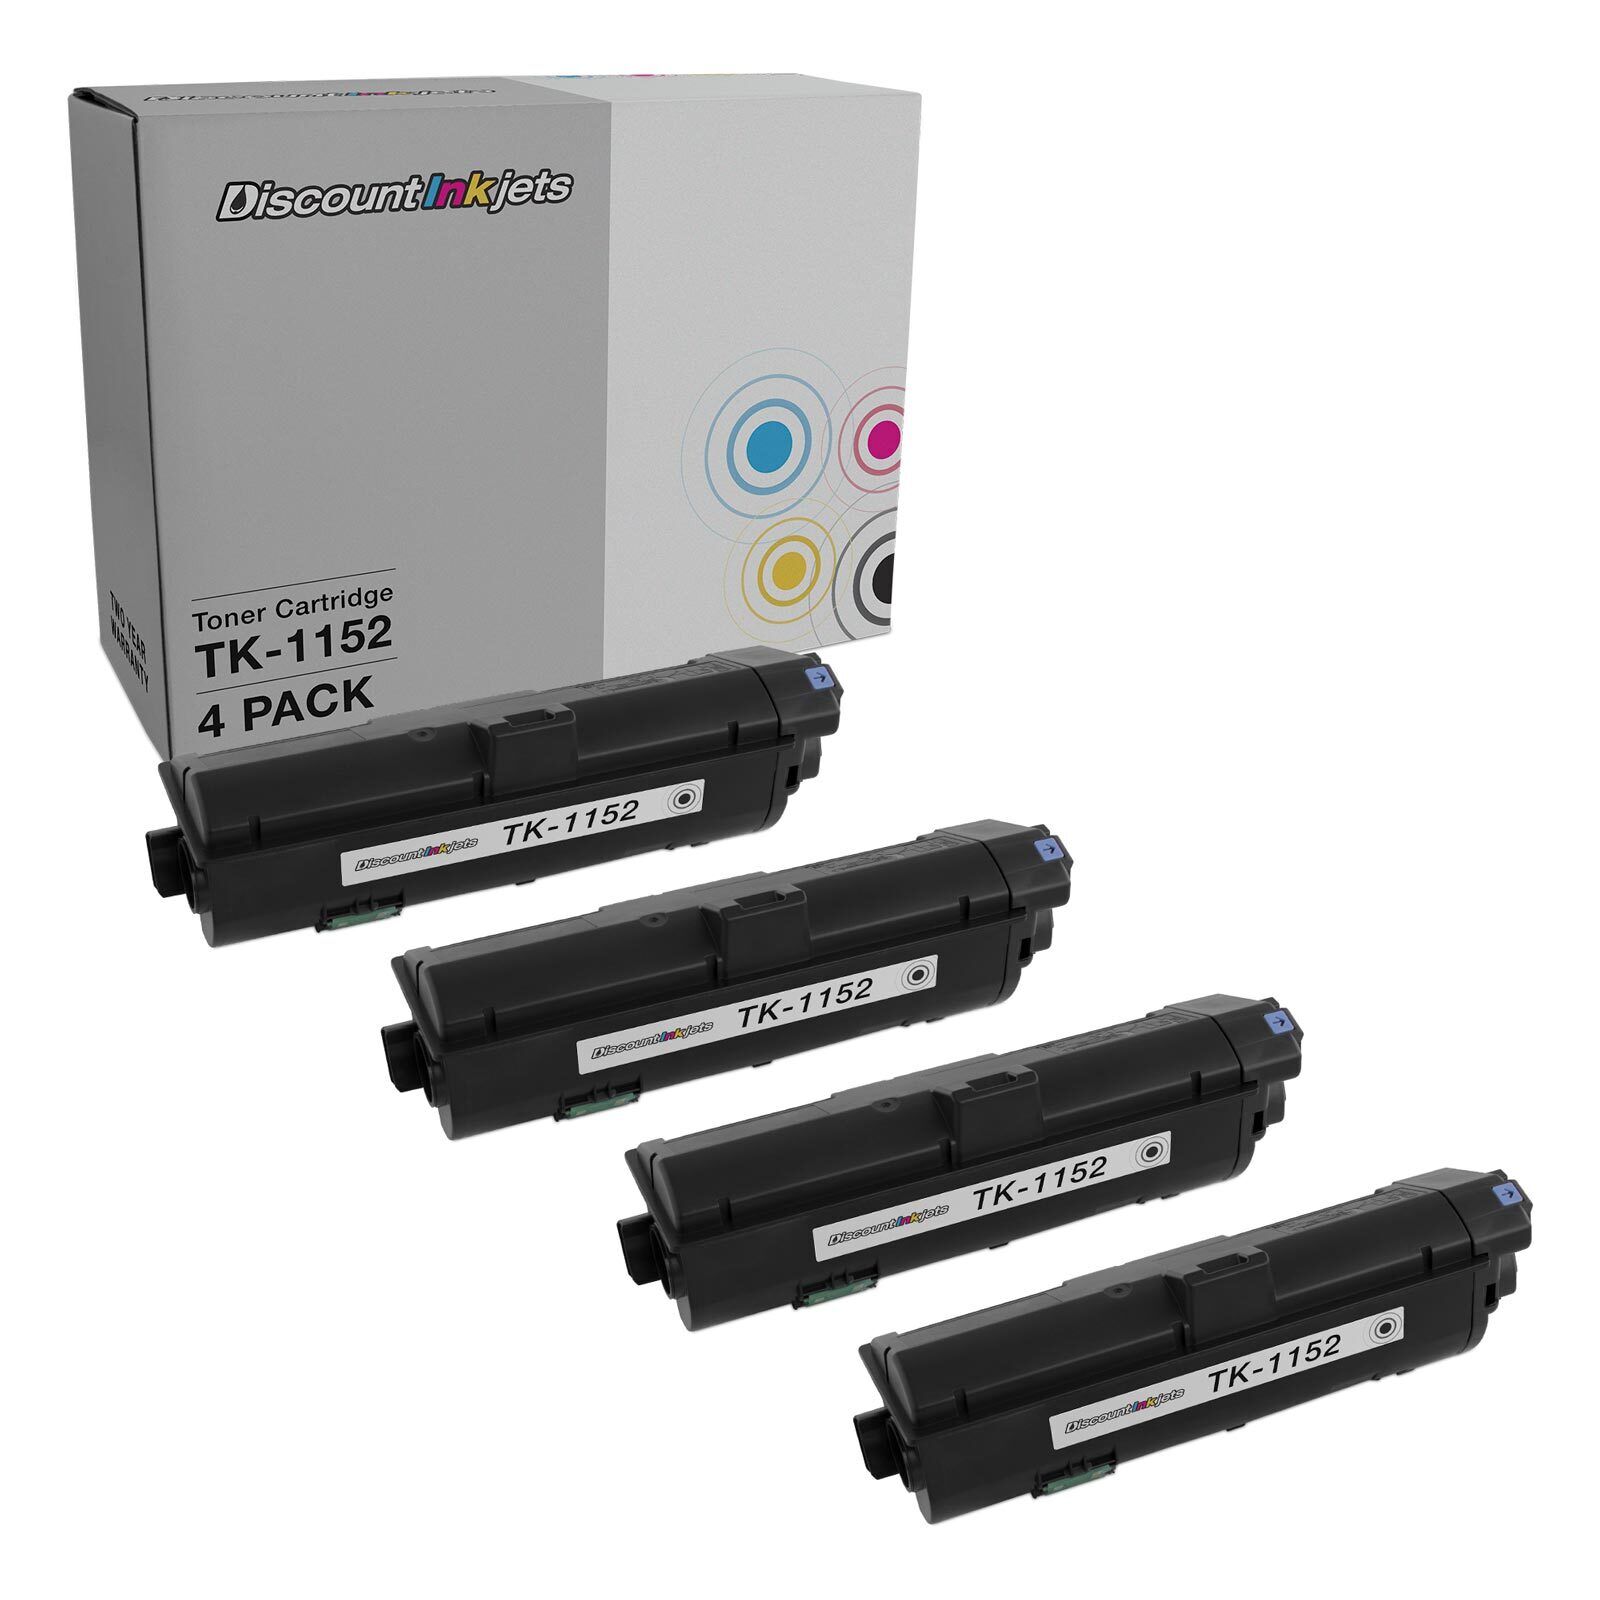 Toner Cartridge Replacement for Kyocera TK-1152 1T02RV0US0 Black, 4-Pack